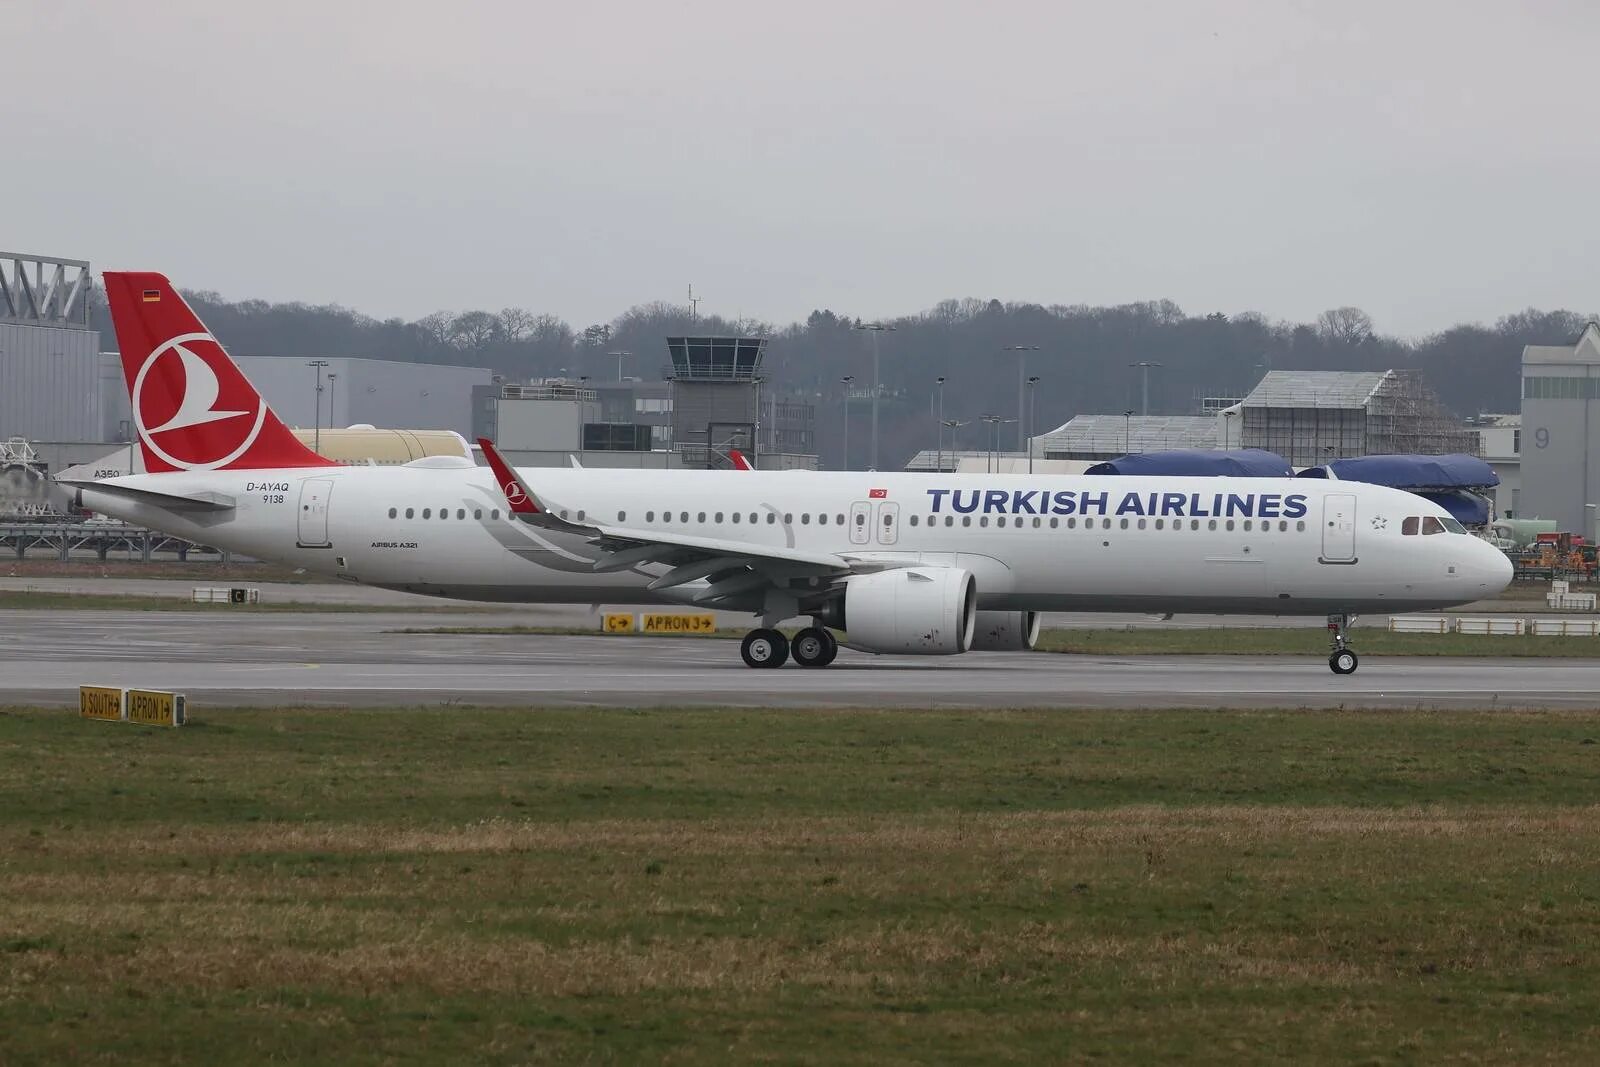 Airbus a321 турецкие авиалинии. A321-271nx. Туркиш лайн Airbus a321-200. А321-271. Туркиш эйрлайнс отзывы